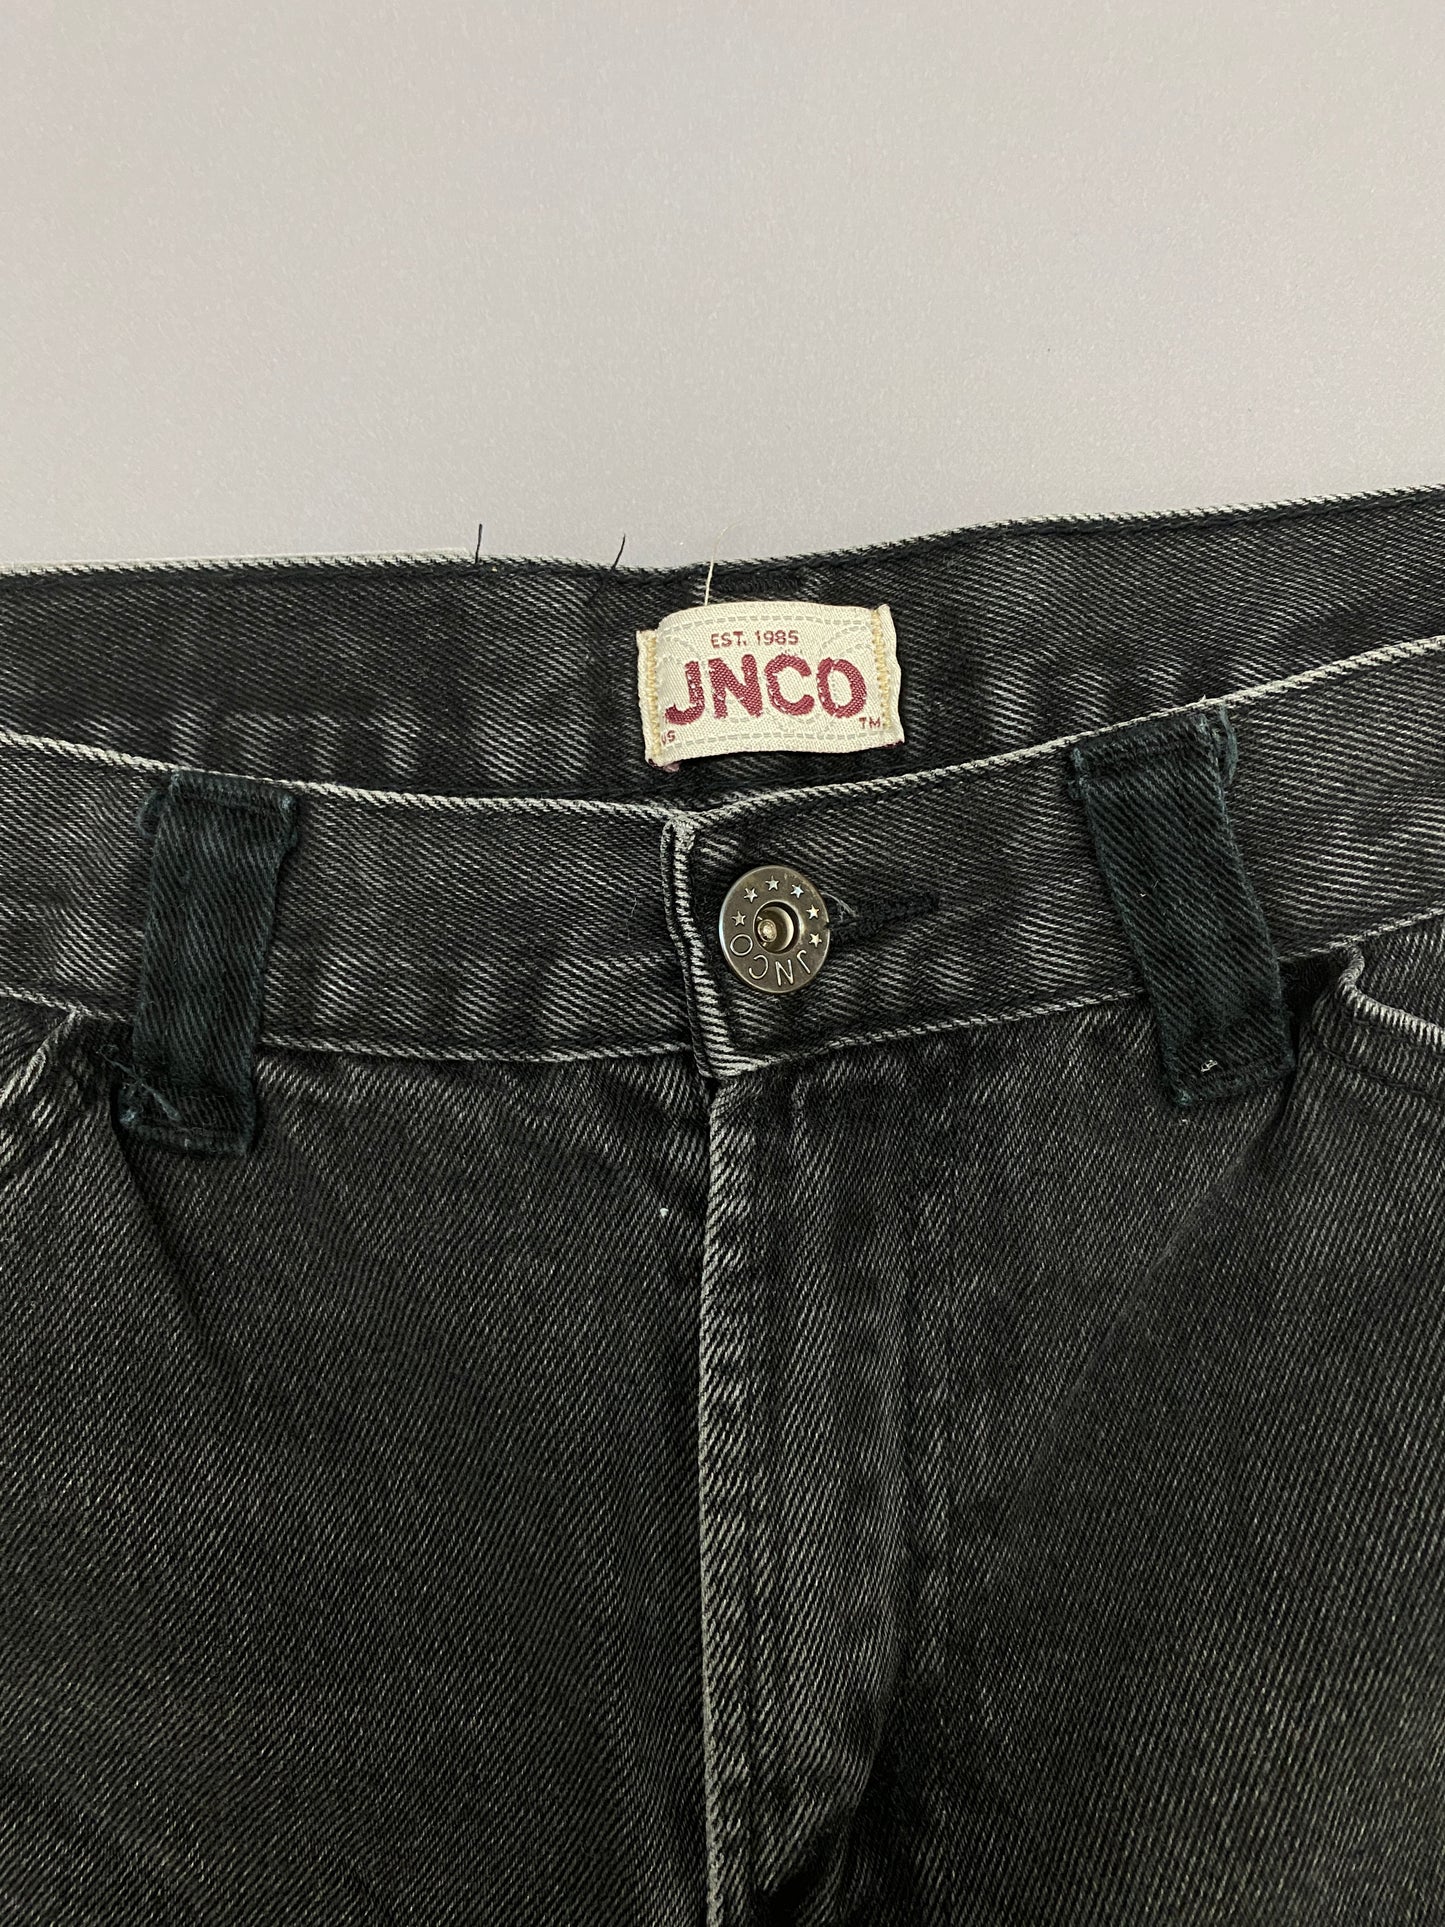 JNCO Jeans Carpenter Shorts - 32